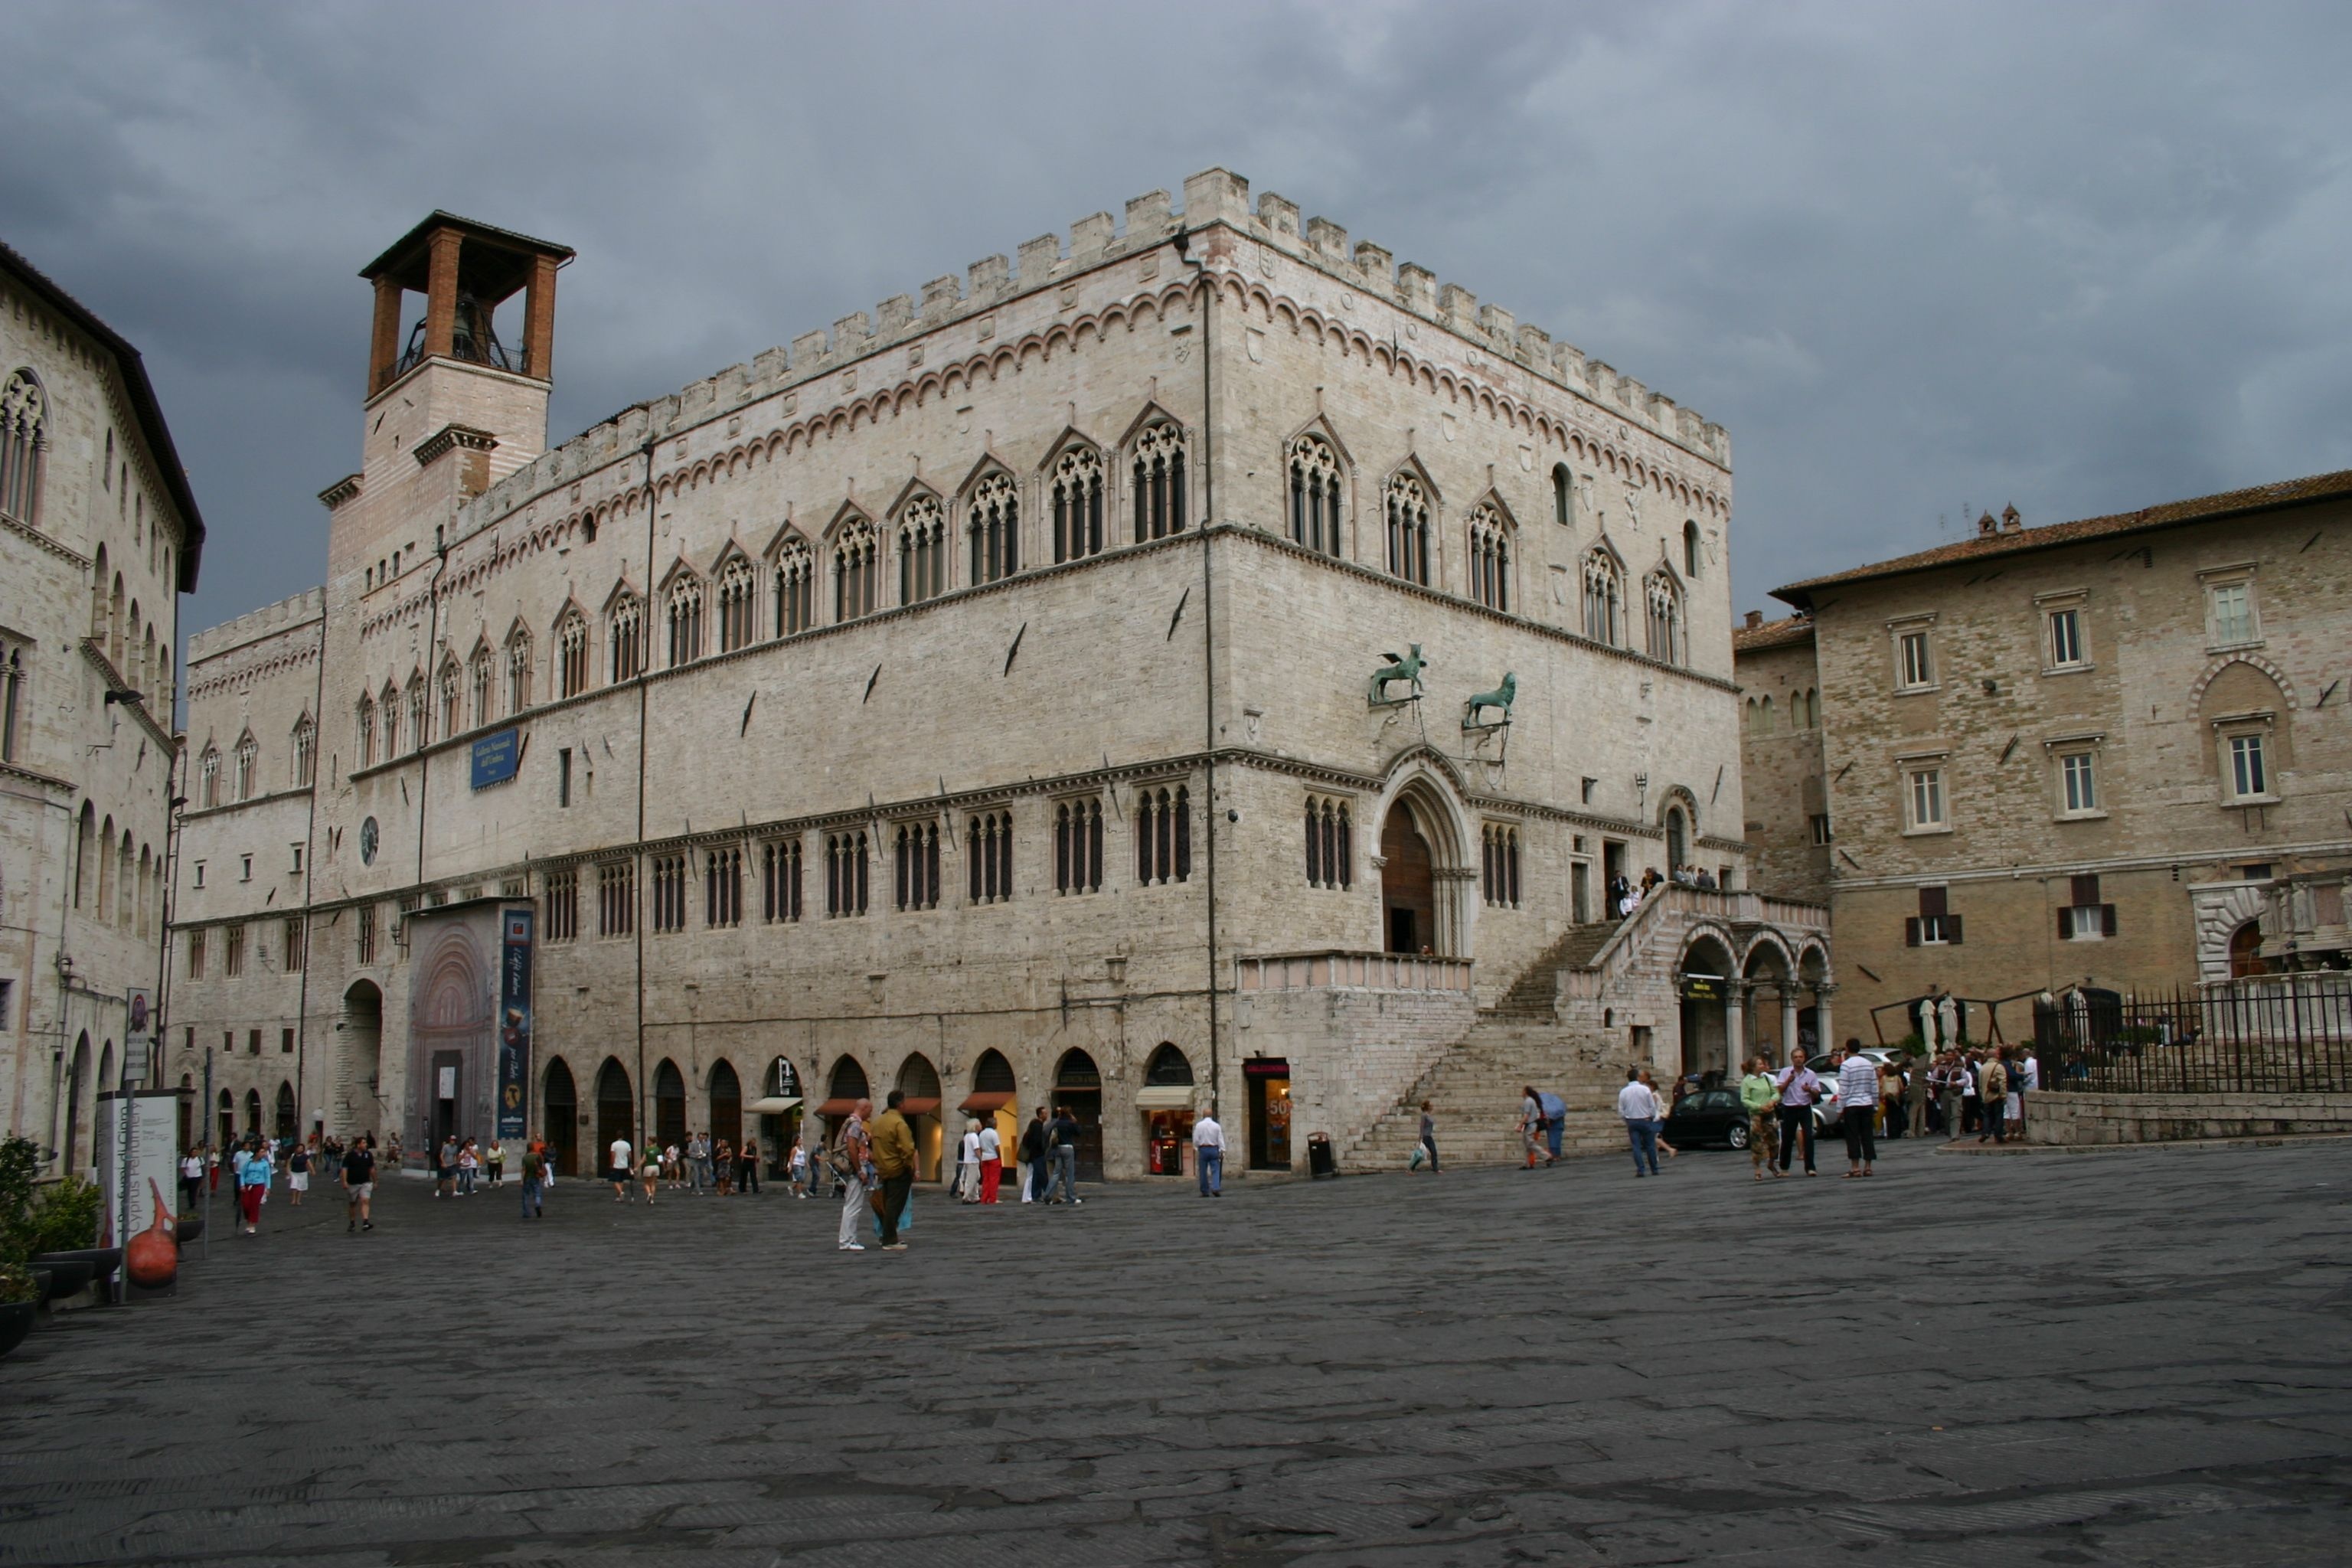 Perugia wallpapers, Beautiful backgrounds, Stunning views, Digital artistry, 3080x2050 HD Desktop